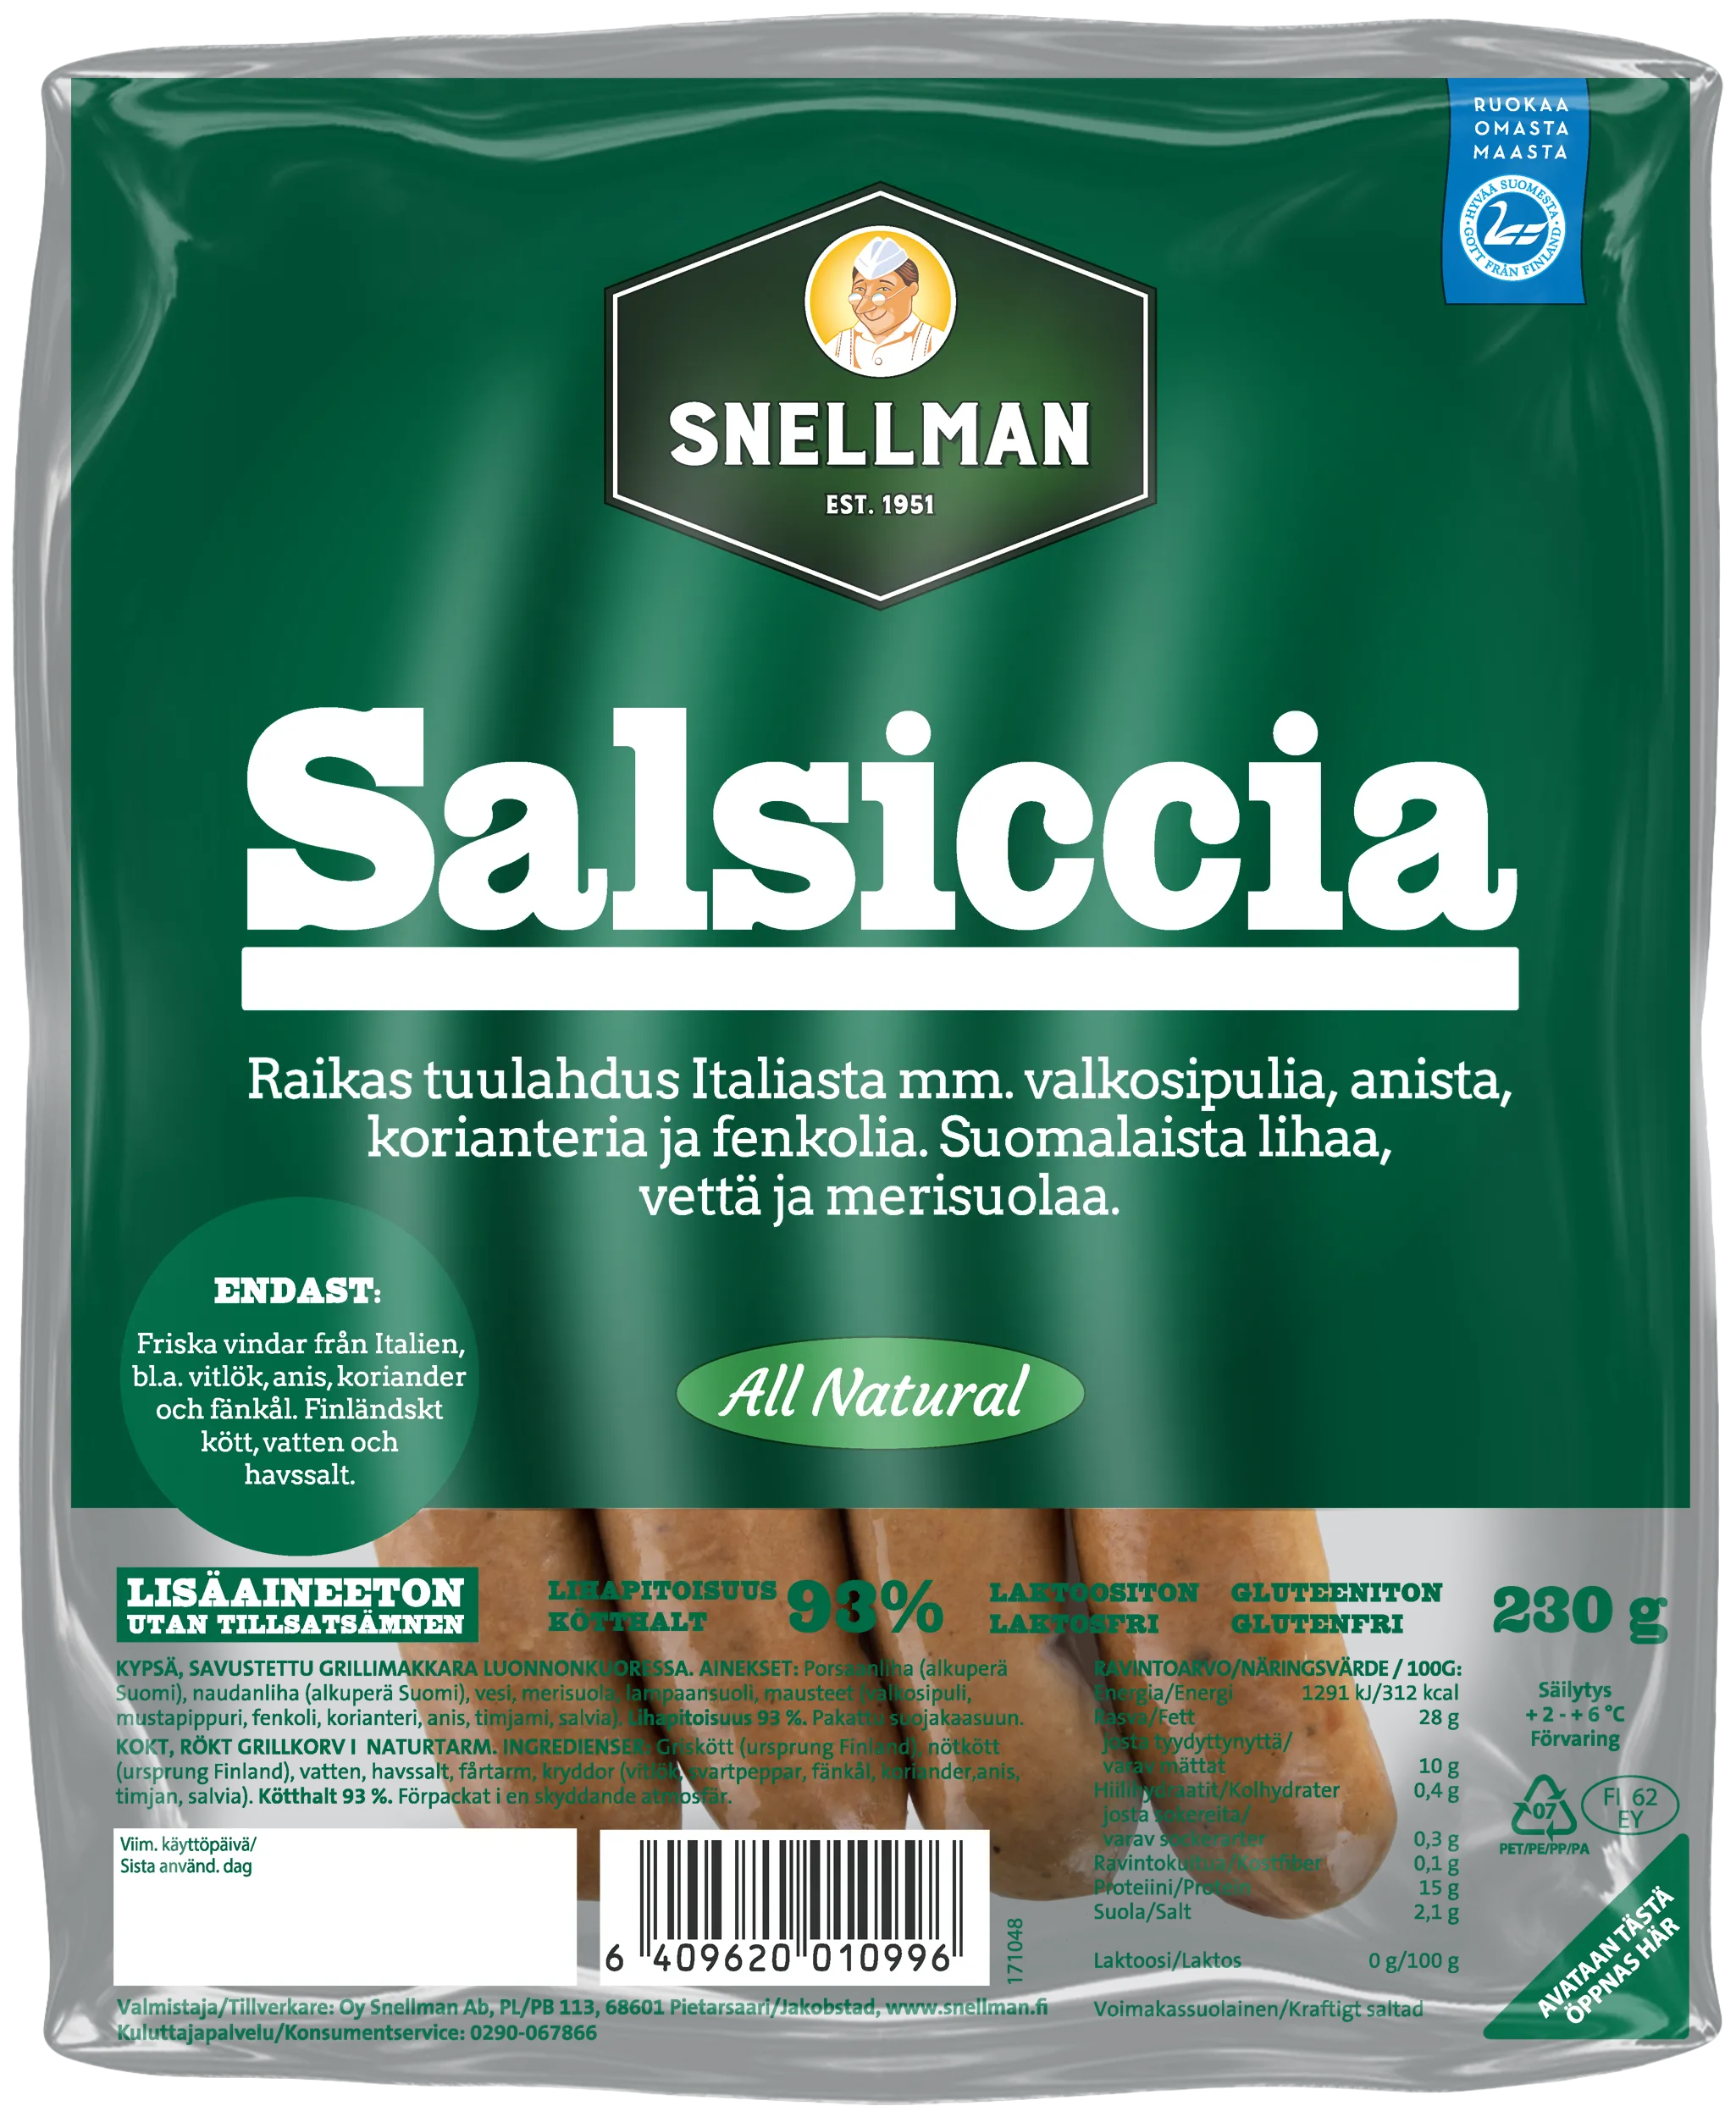 All Natural Salsiccia grillkorv 230 g